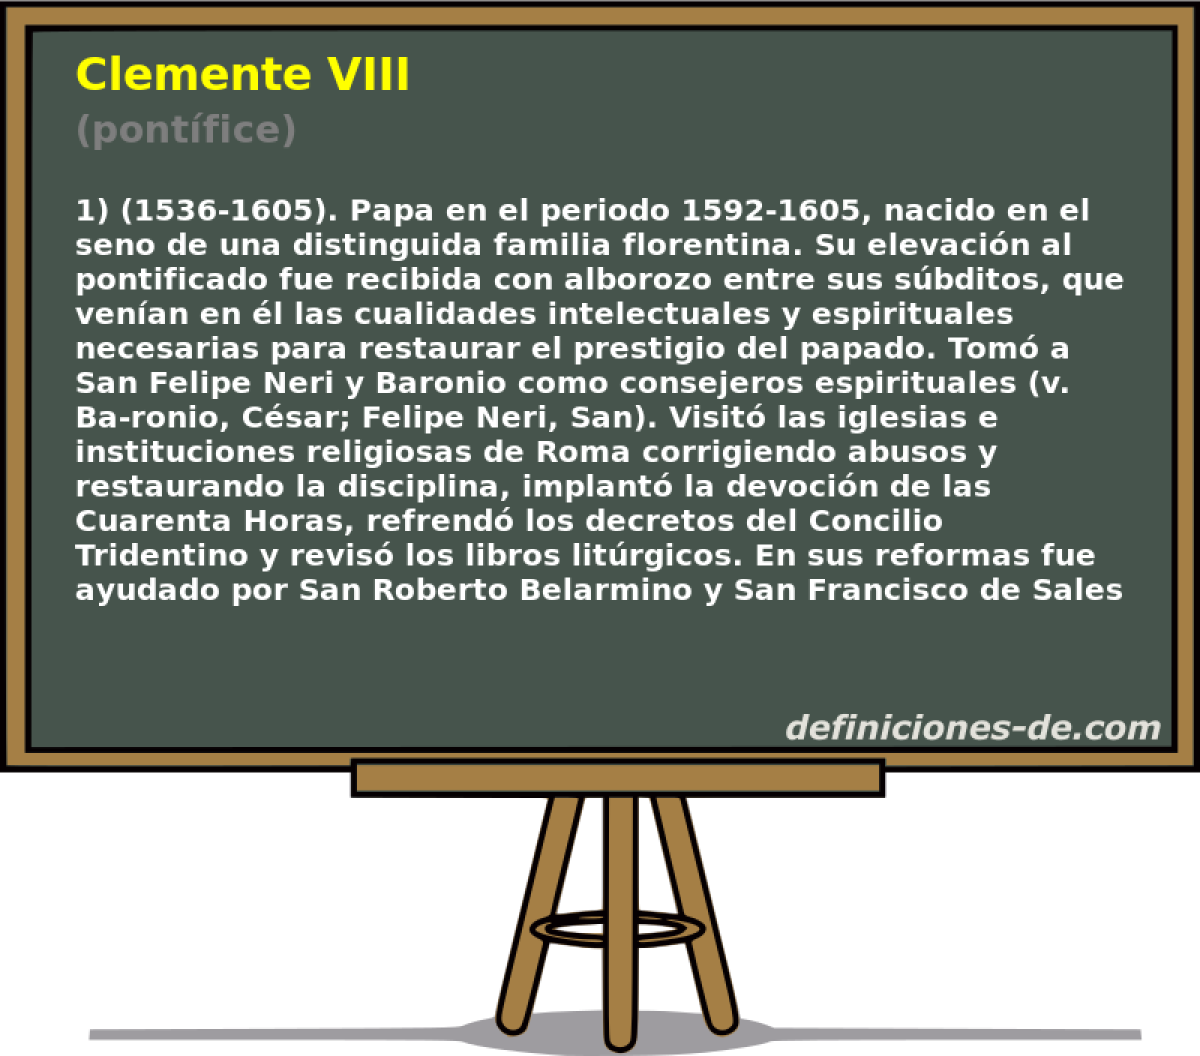 Clemente VIII (pontfice)